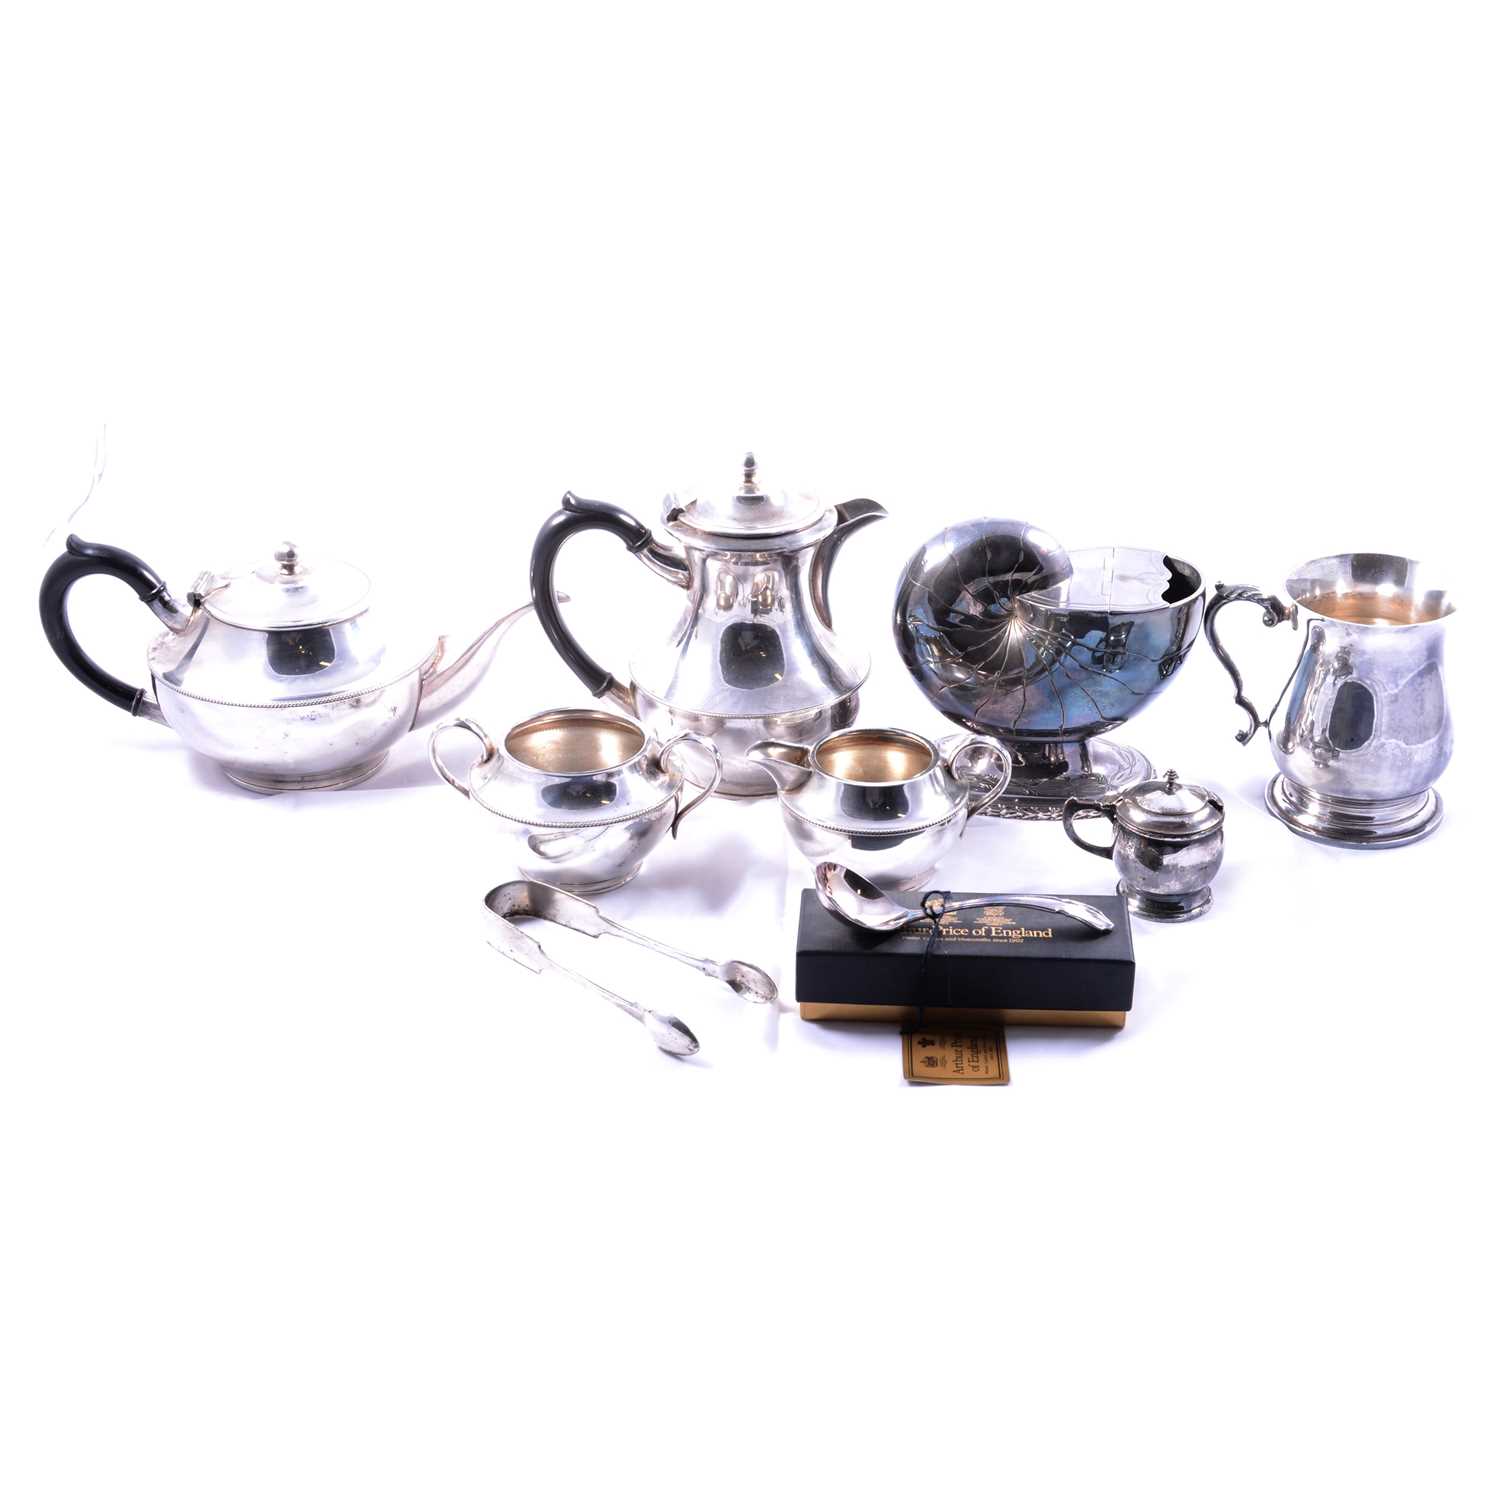 Silver plated tea set, spoon warmer, tankard, etc.,